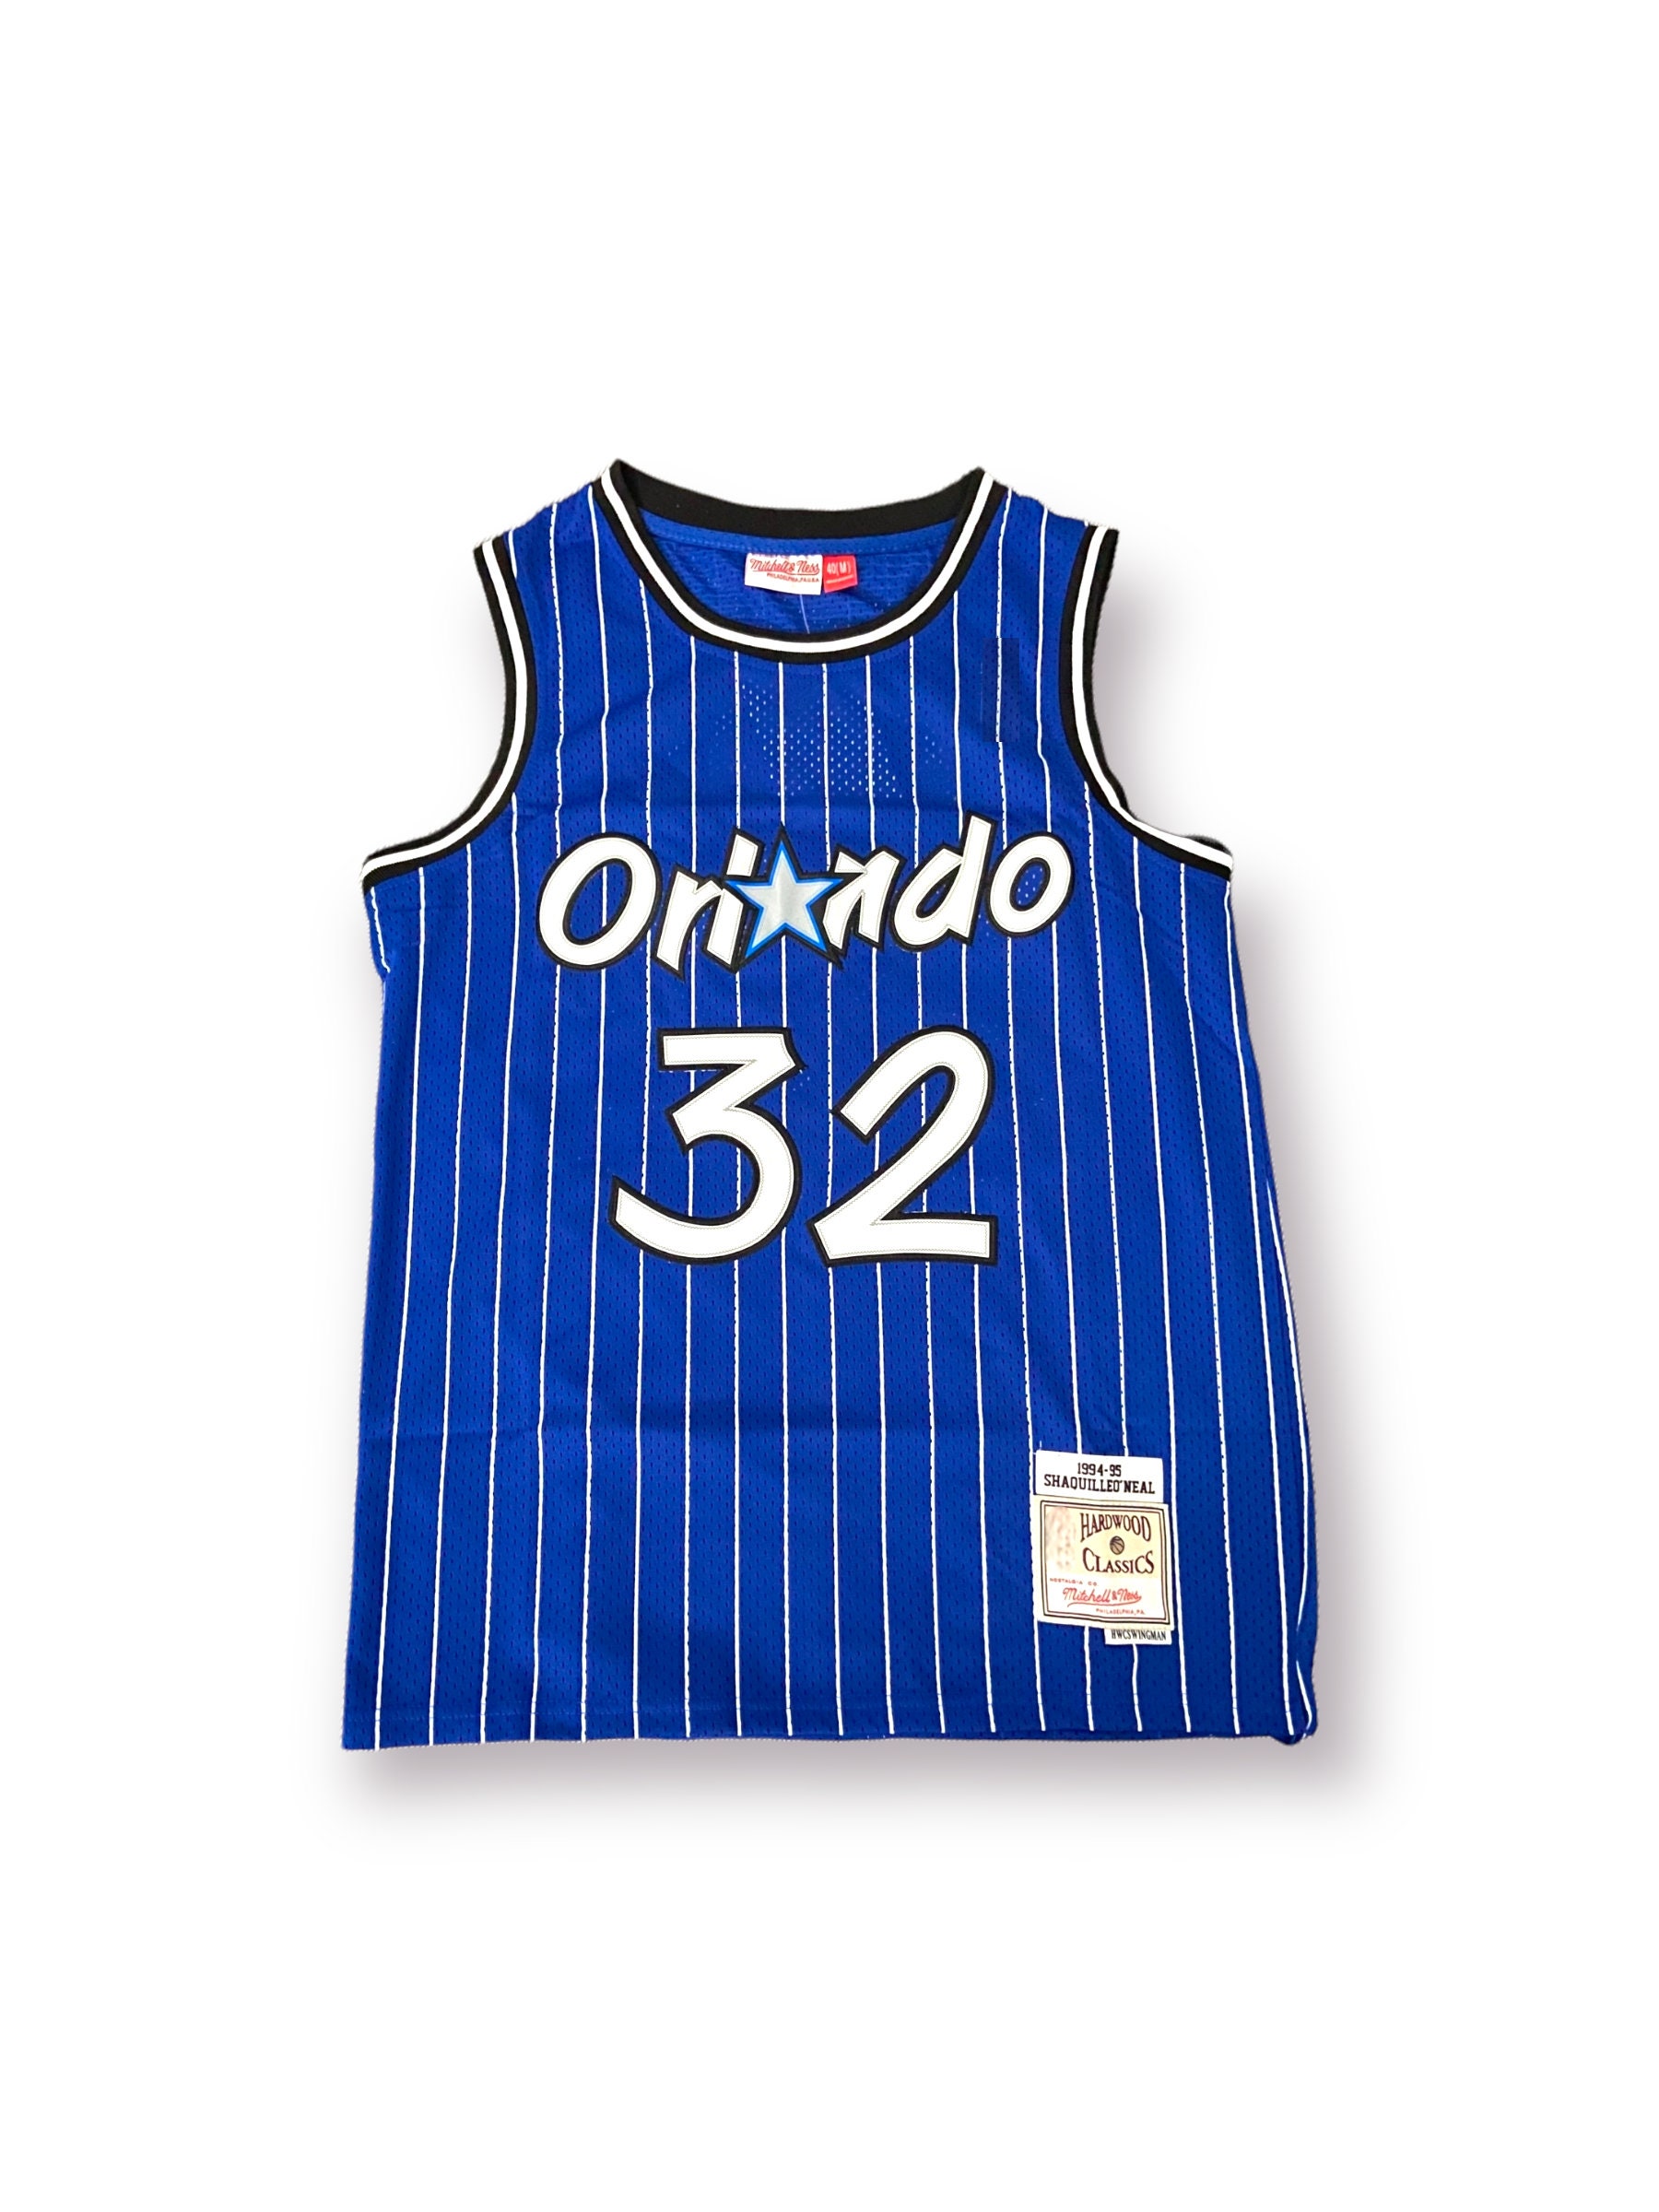 ORLANDO MAGIC 90s NBA BASKETBALL JERSEY VINTAGE SHAQUILLE O'NEAL #32  PINSTRIPE !